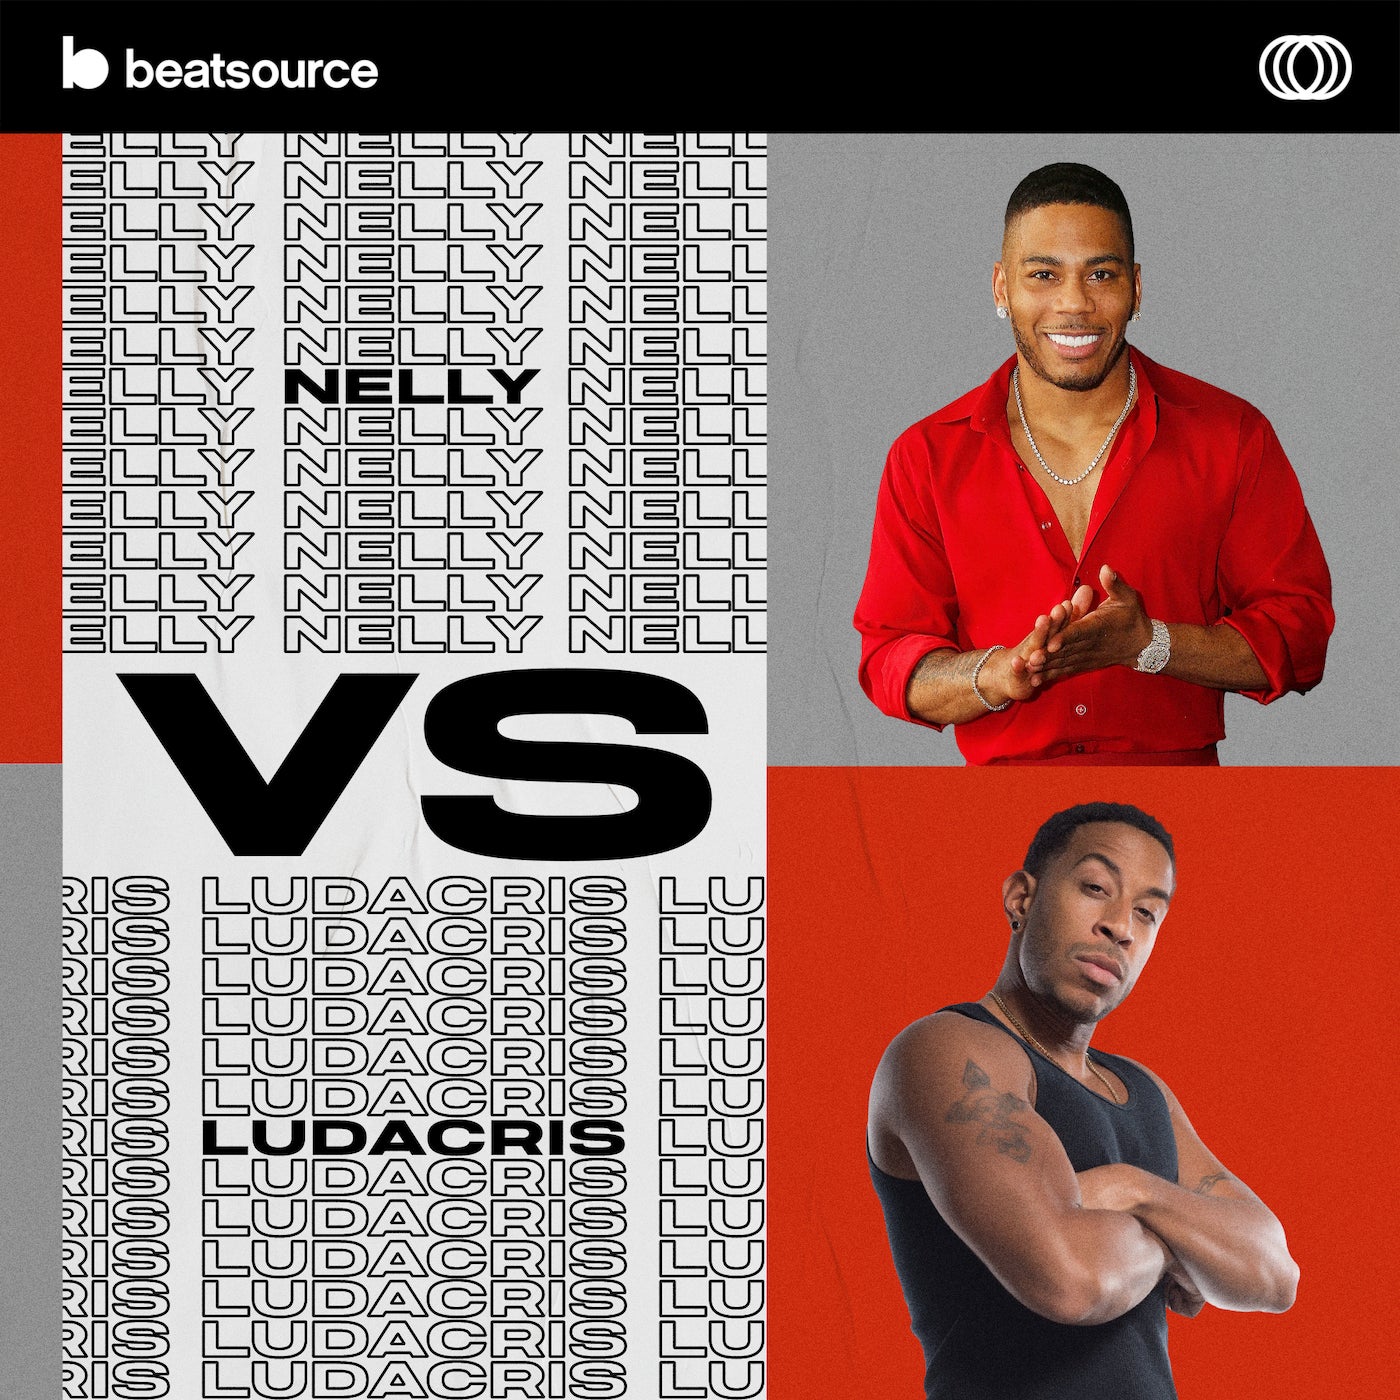 Nelly Vs Ludacris Playlist For Djs On Beatsource